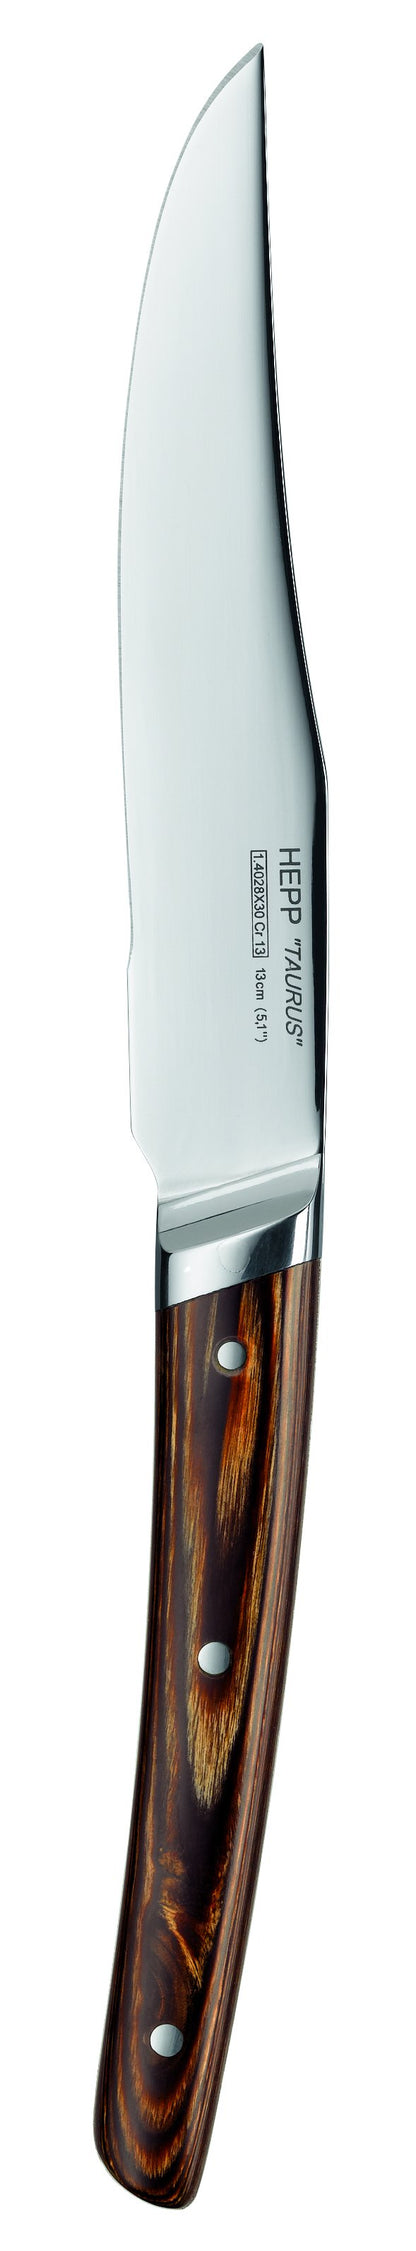 Steak knife TAURUS 256mm